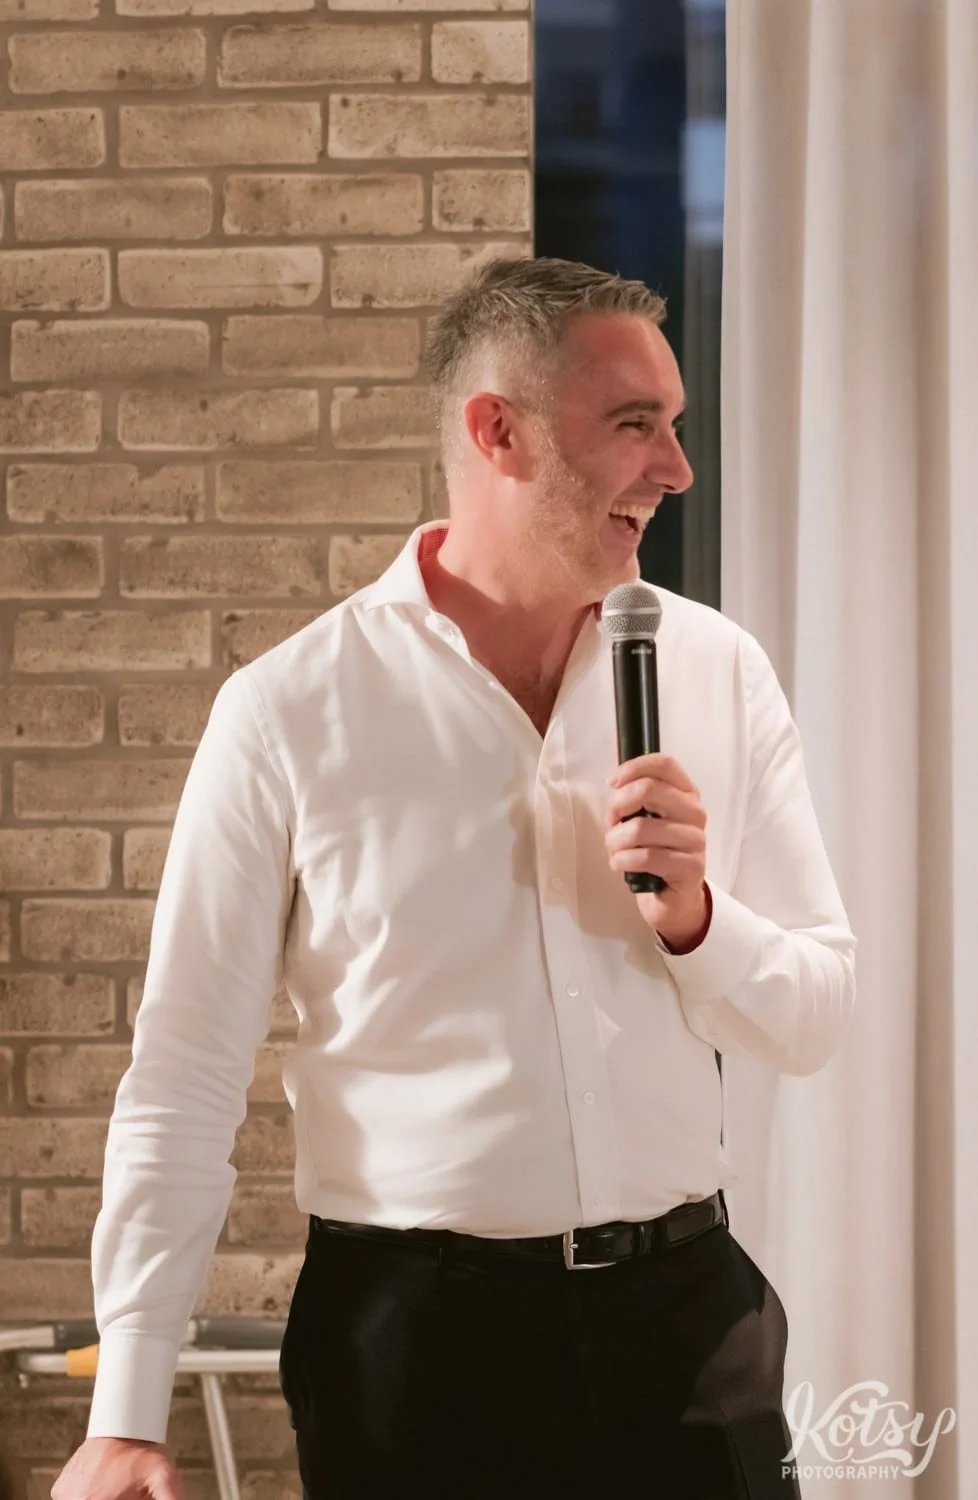 A man smiles big as he makes a speech during a Village Loft wedding reception in Toronto, Canada